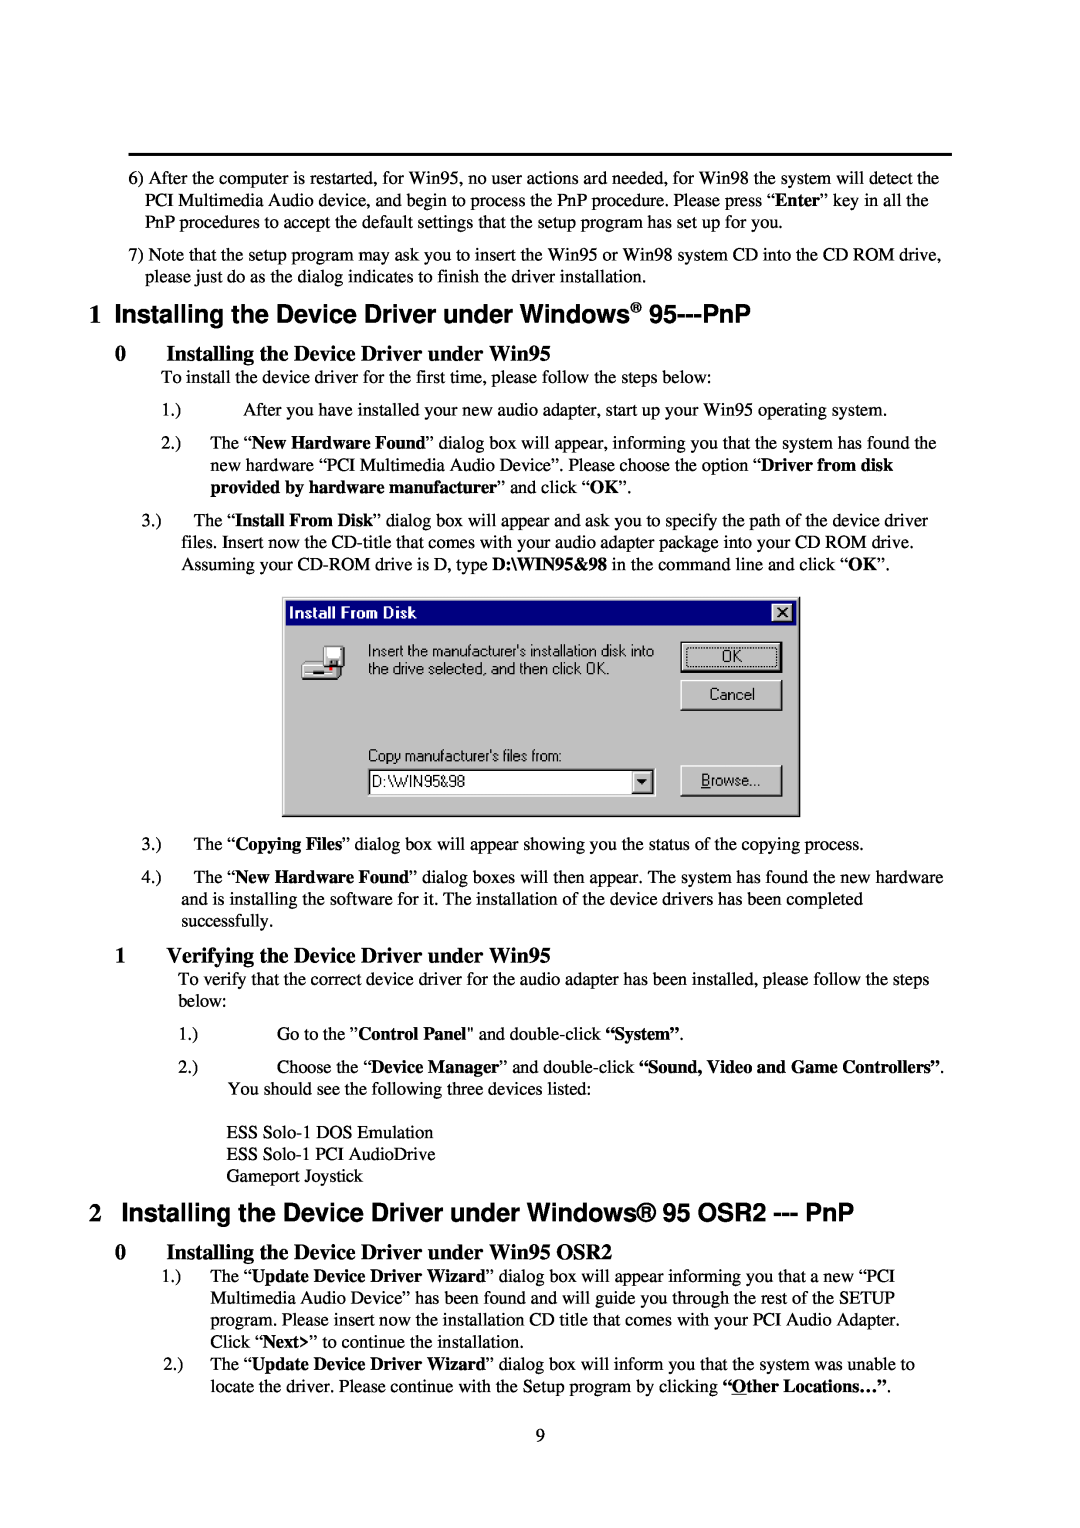 IBM L70 Installing the Device Driver under Windowsâ 95---PnP, Installing the Device Driver under Windows 95 OSR2 --- PnP 